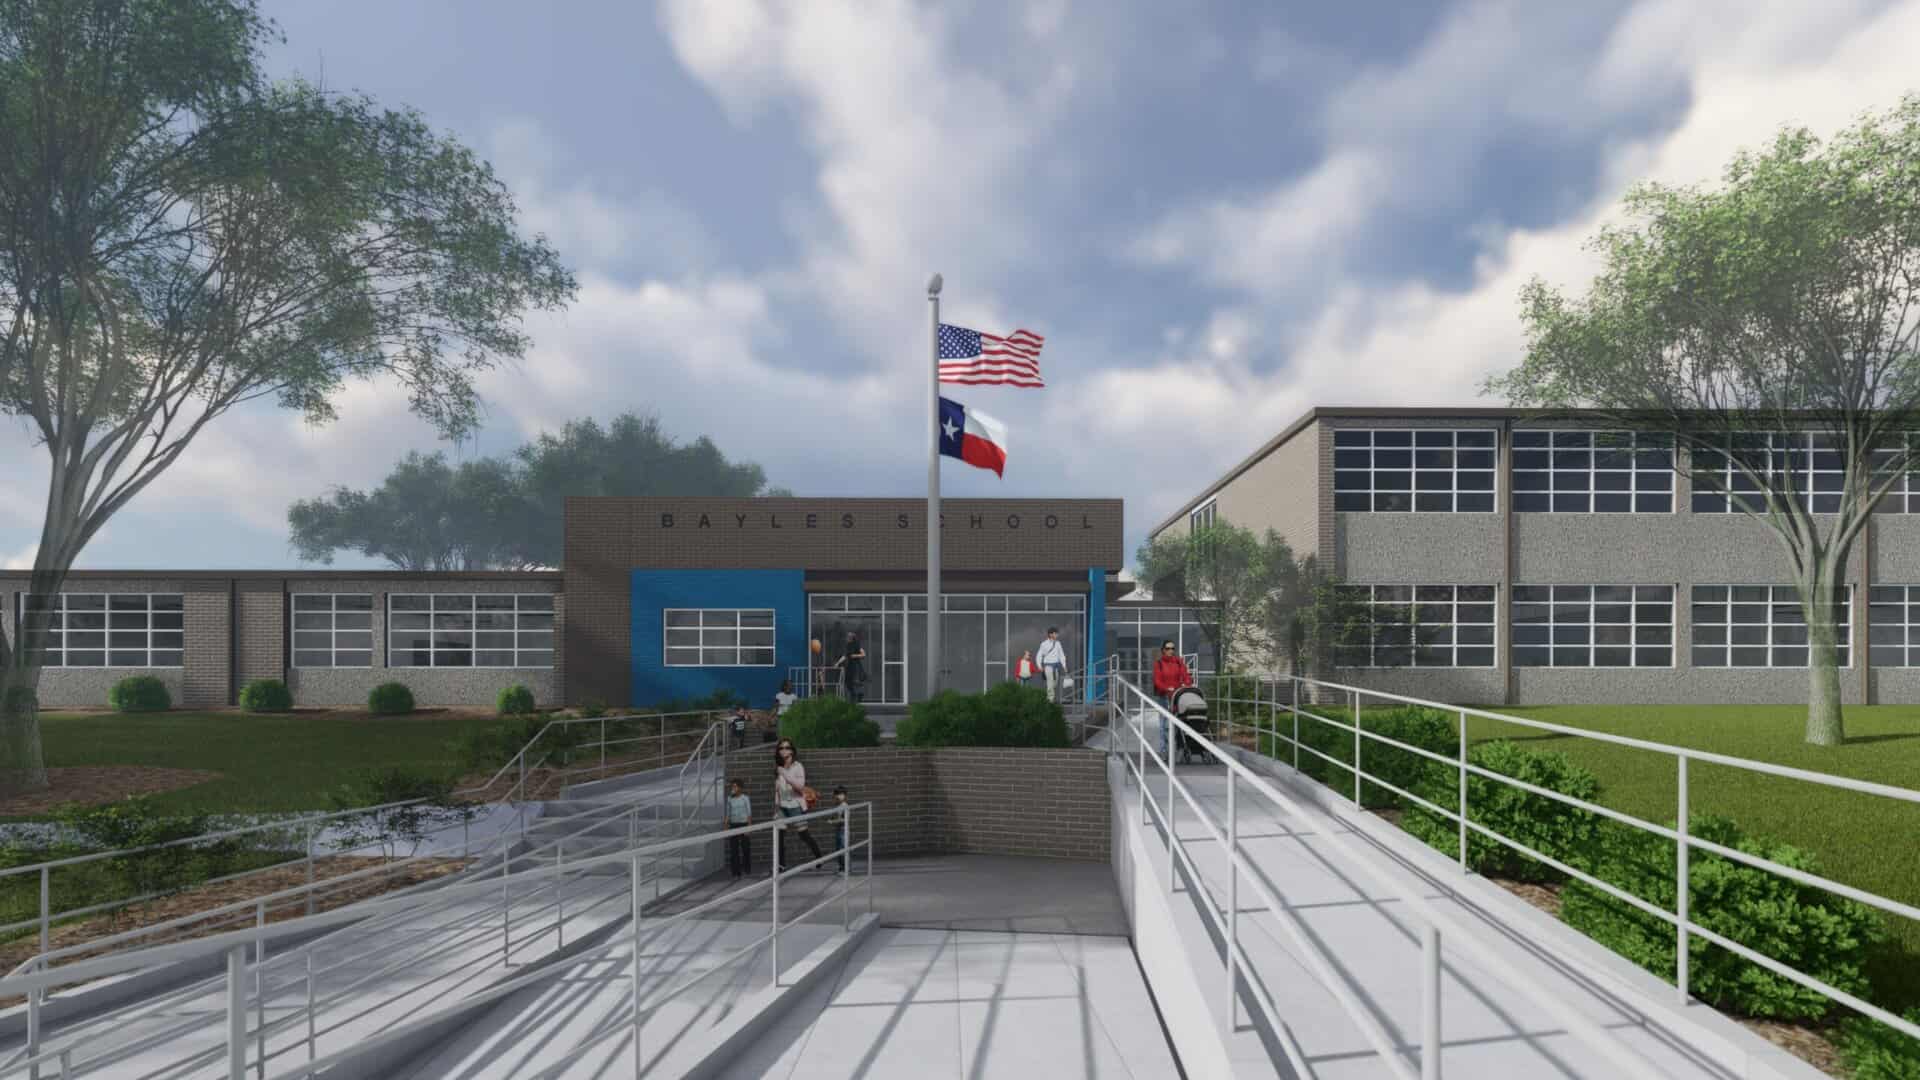 Bayles Elementary School